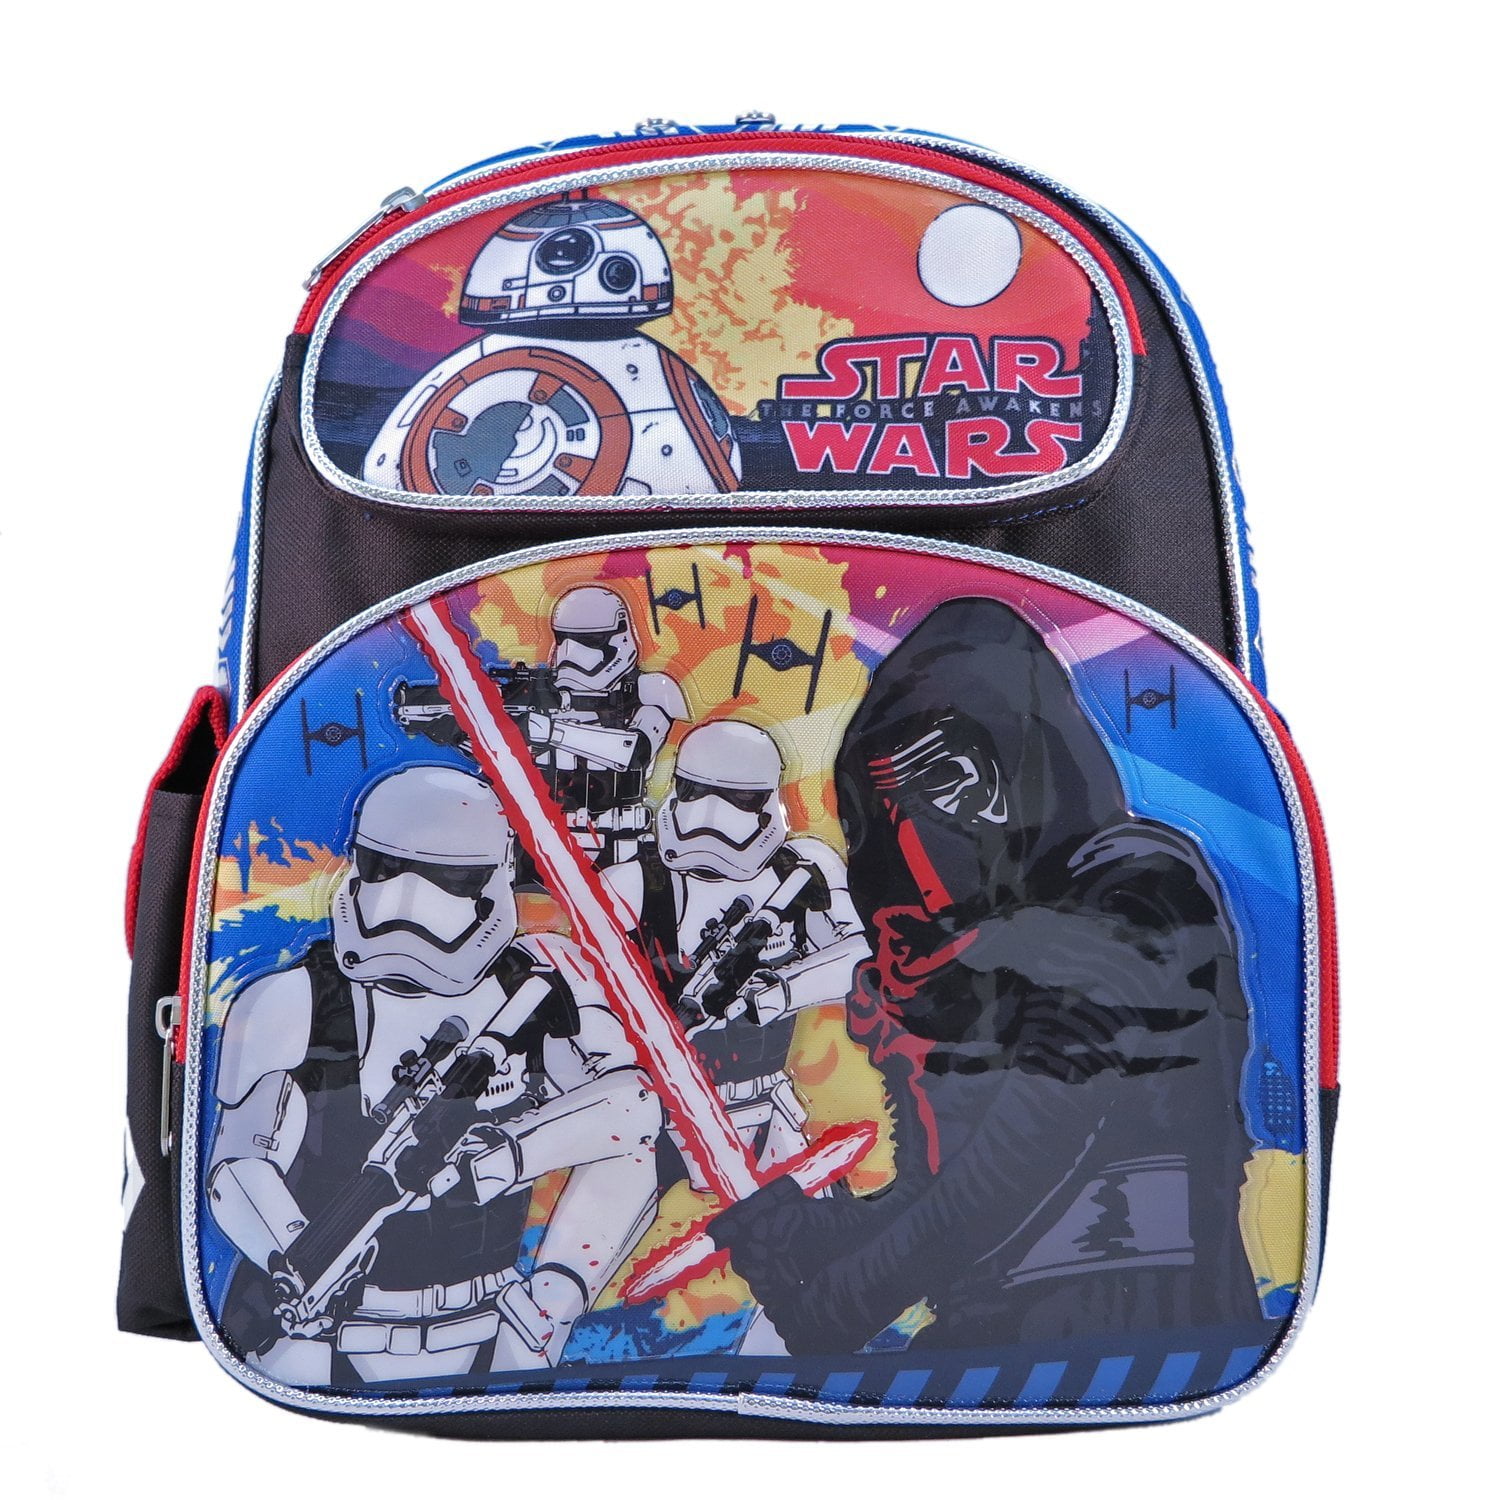 Star Wars VIII The Last Jedi PREMIUM Rucksack Backpack Kids Travel School Bag 